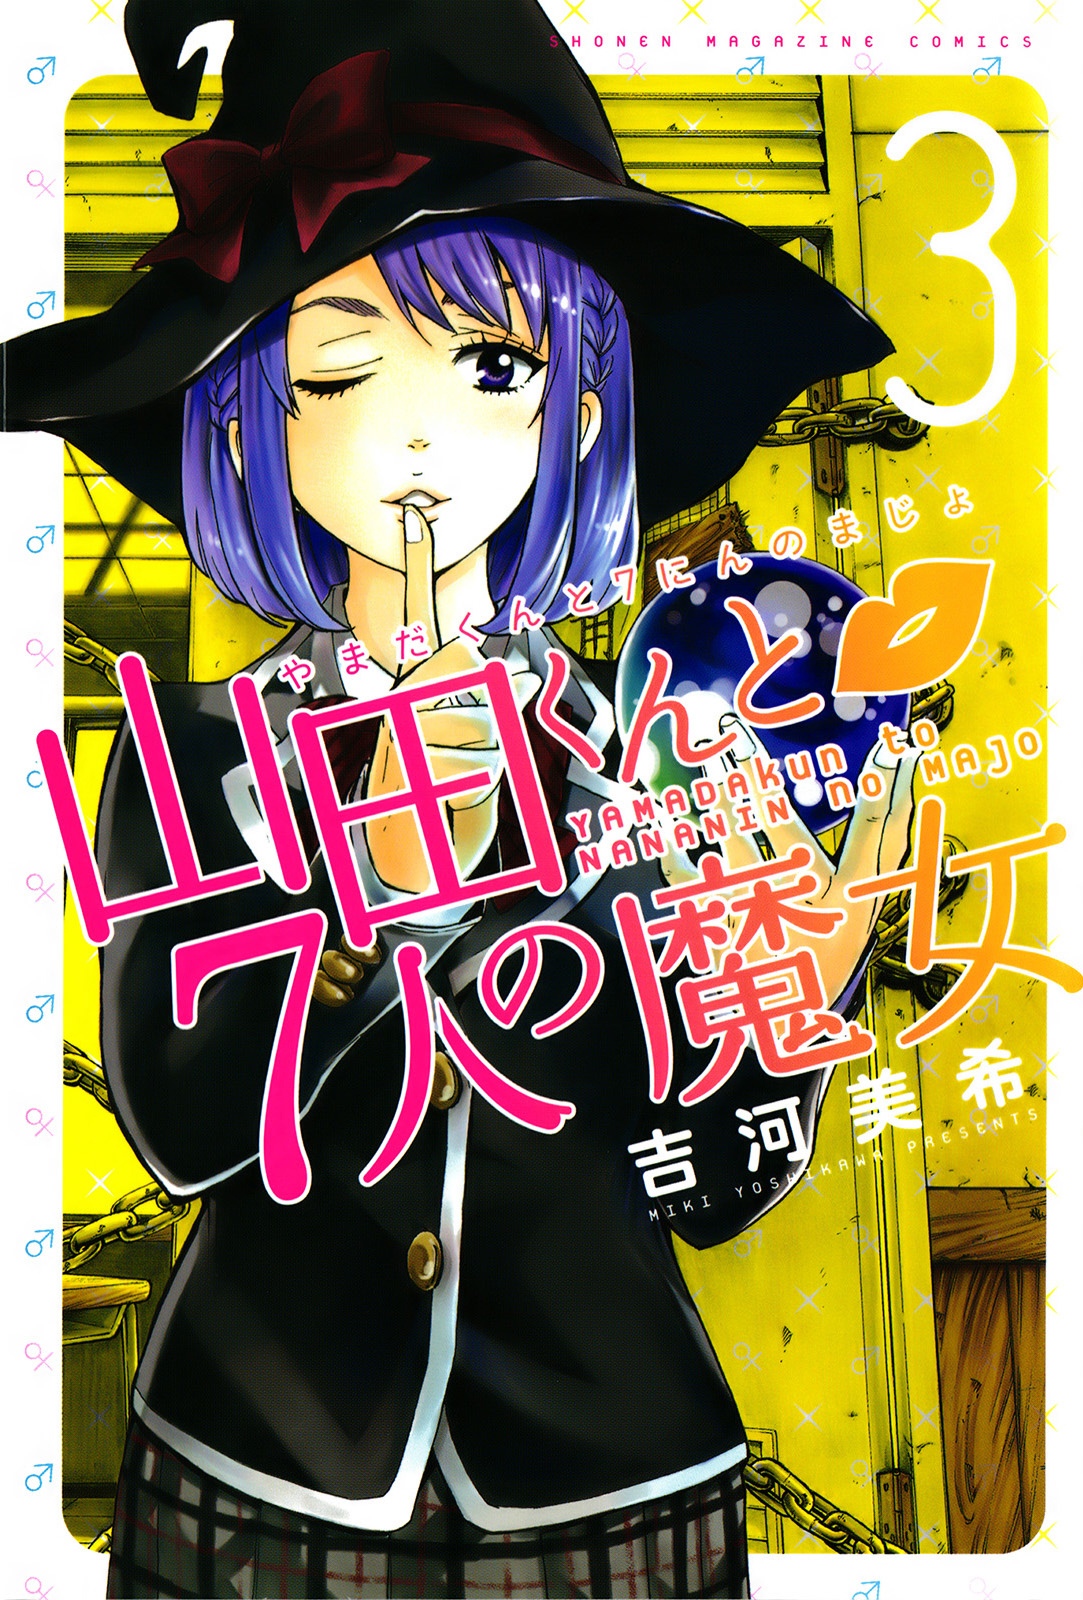 Yamada-kun a 7-nin no Majo - (Volume 1 a 28) - Completo - MangAnime -  Download baixar Mangás e HQs em Kindle .mobi e outros formatos .pdf mangás  para kindle